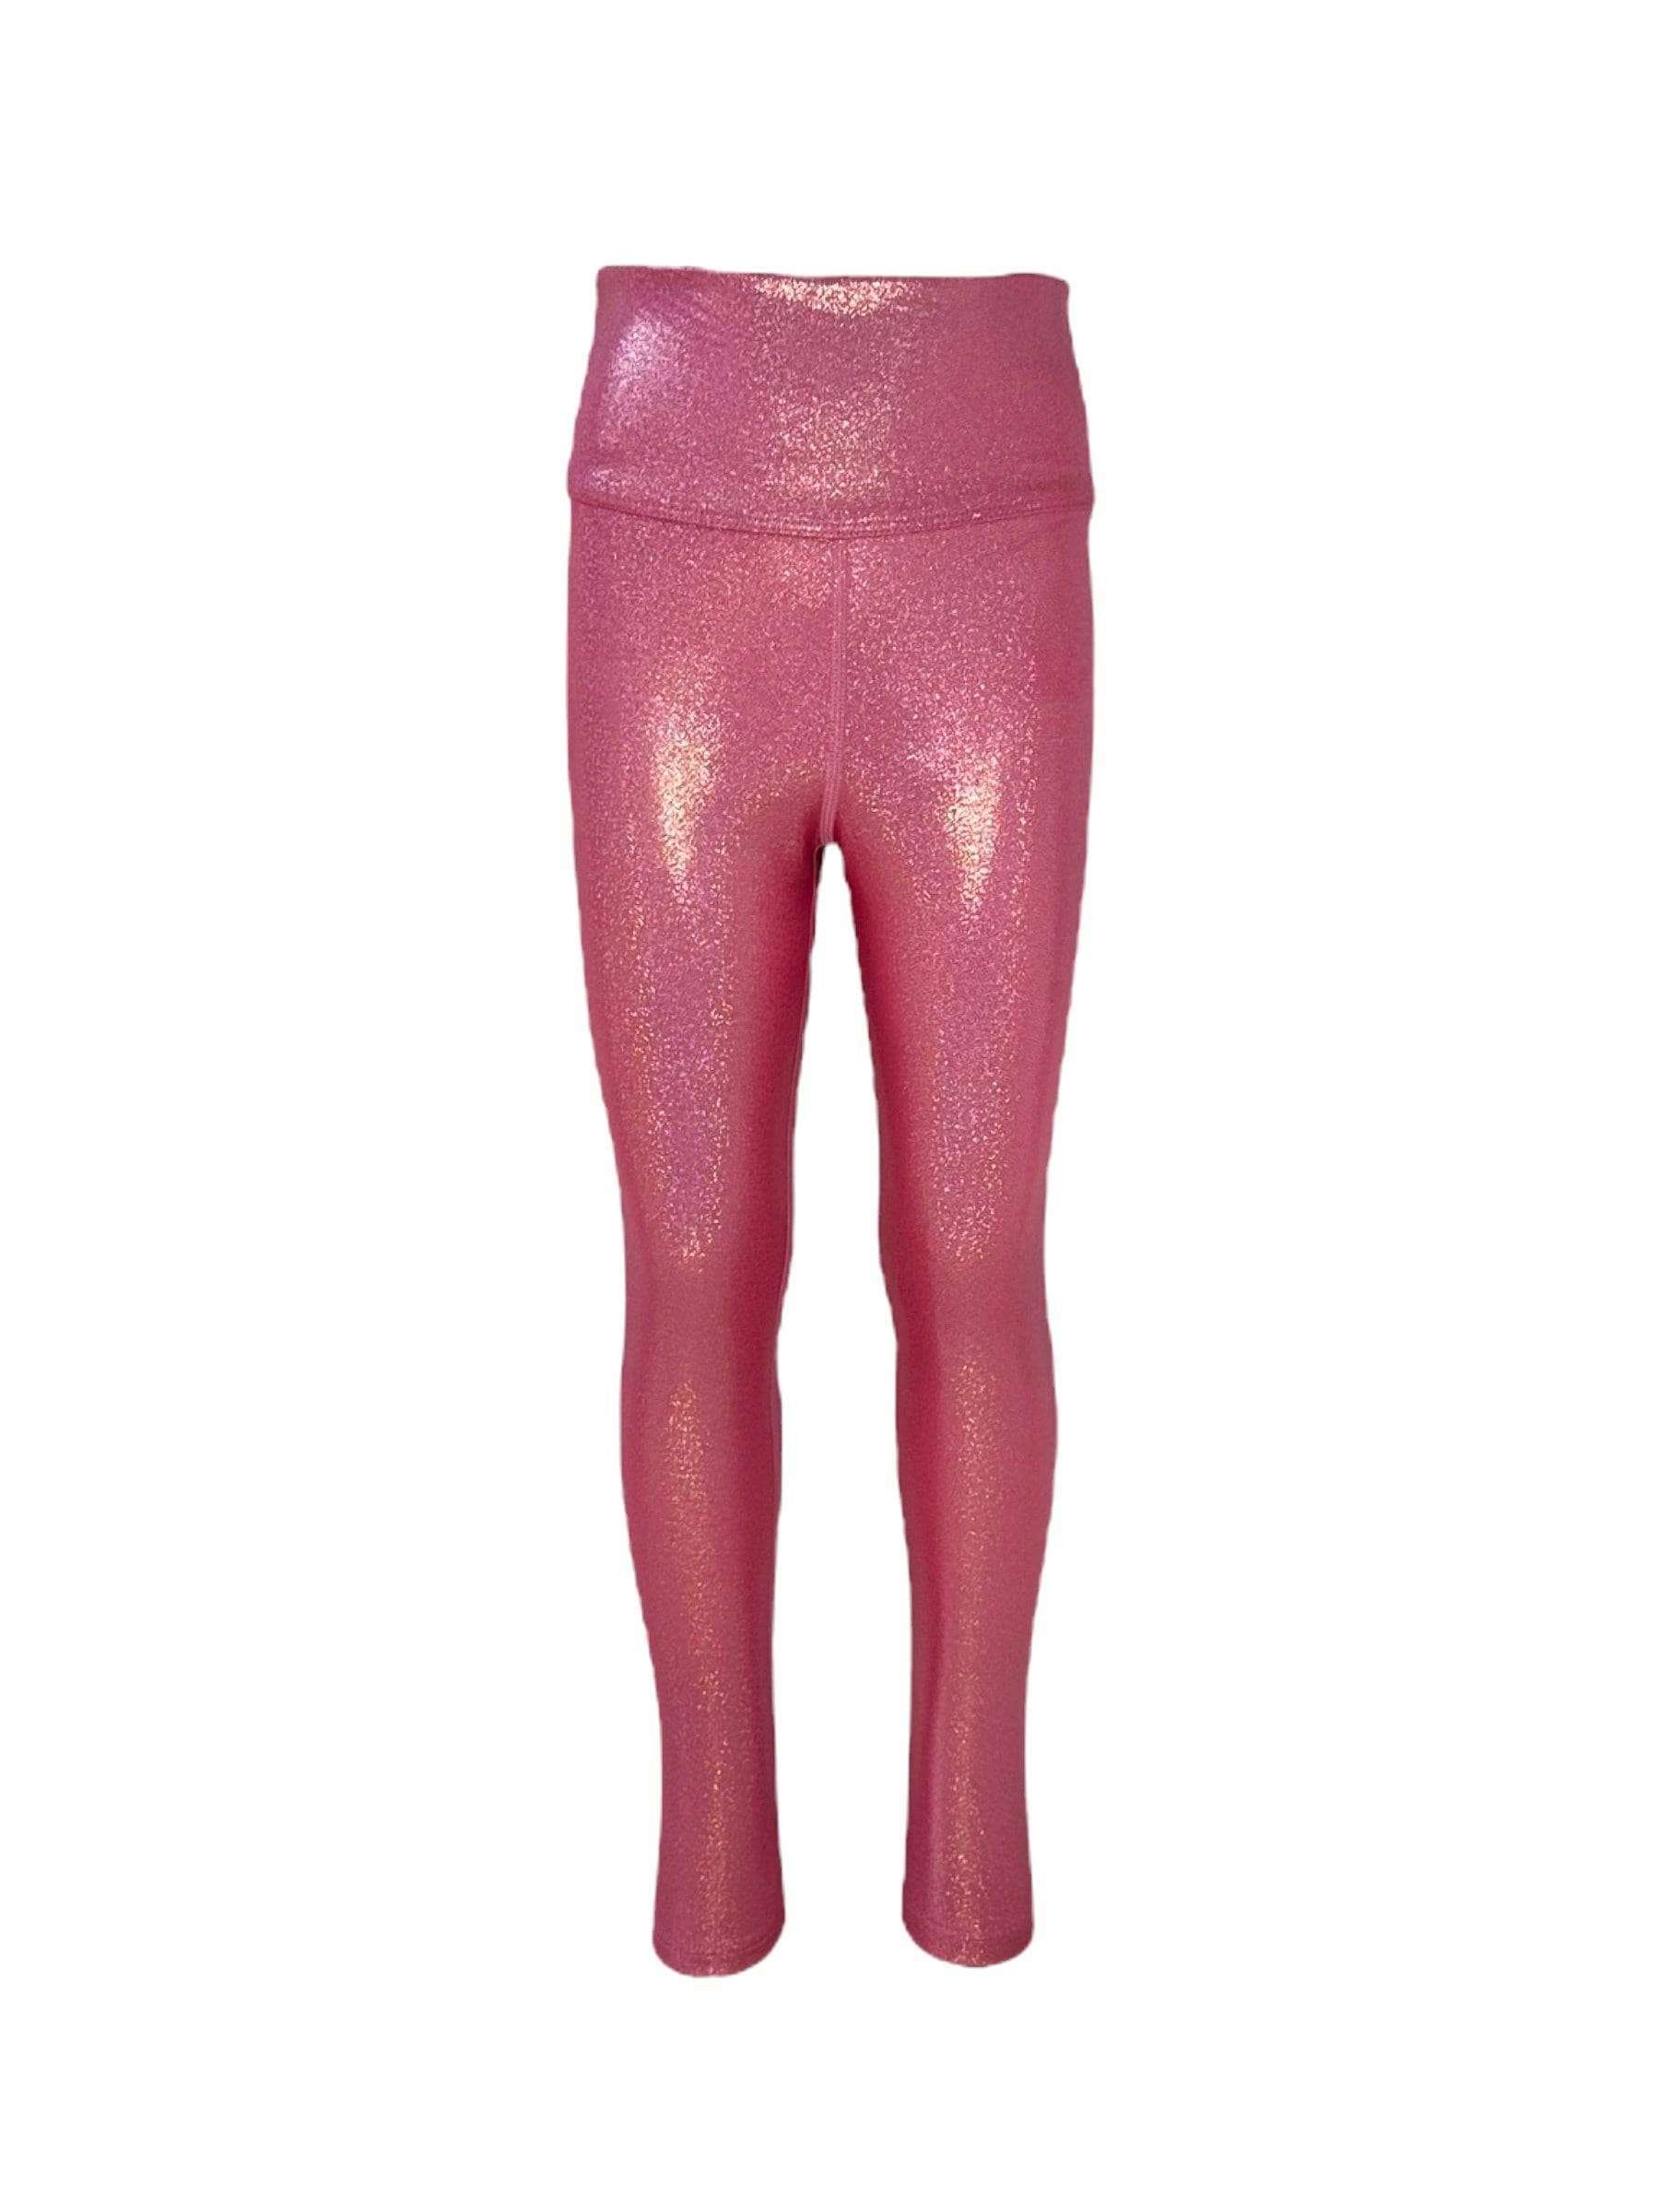 Metallic Pink Athletic Leggings